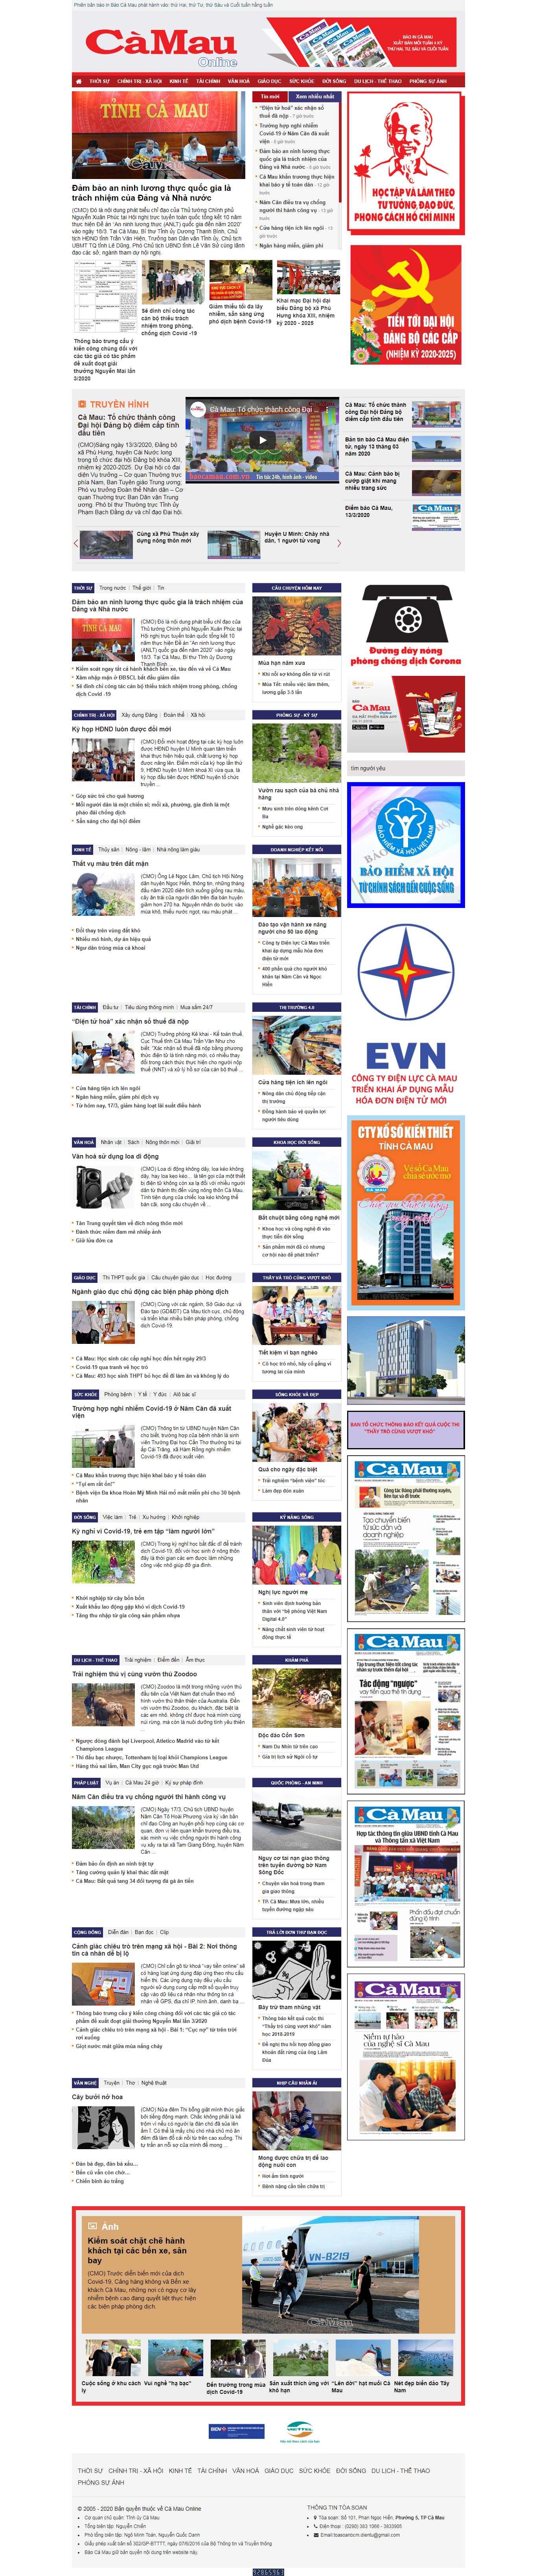 Thiết kế Website báo điện tử online - baocamau.com.vn